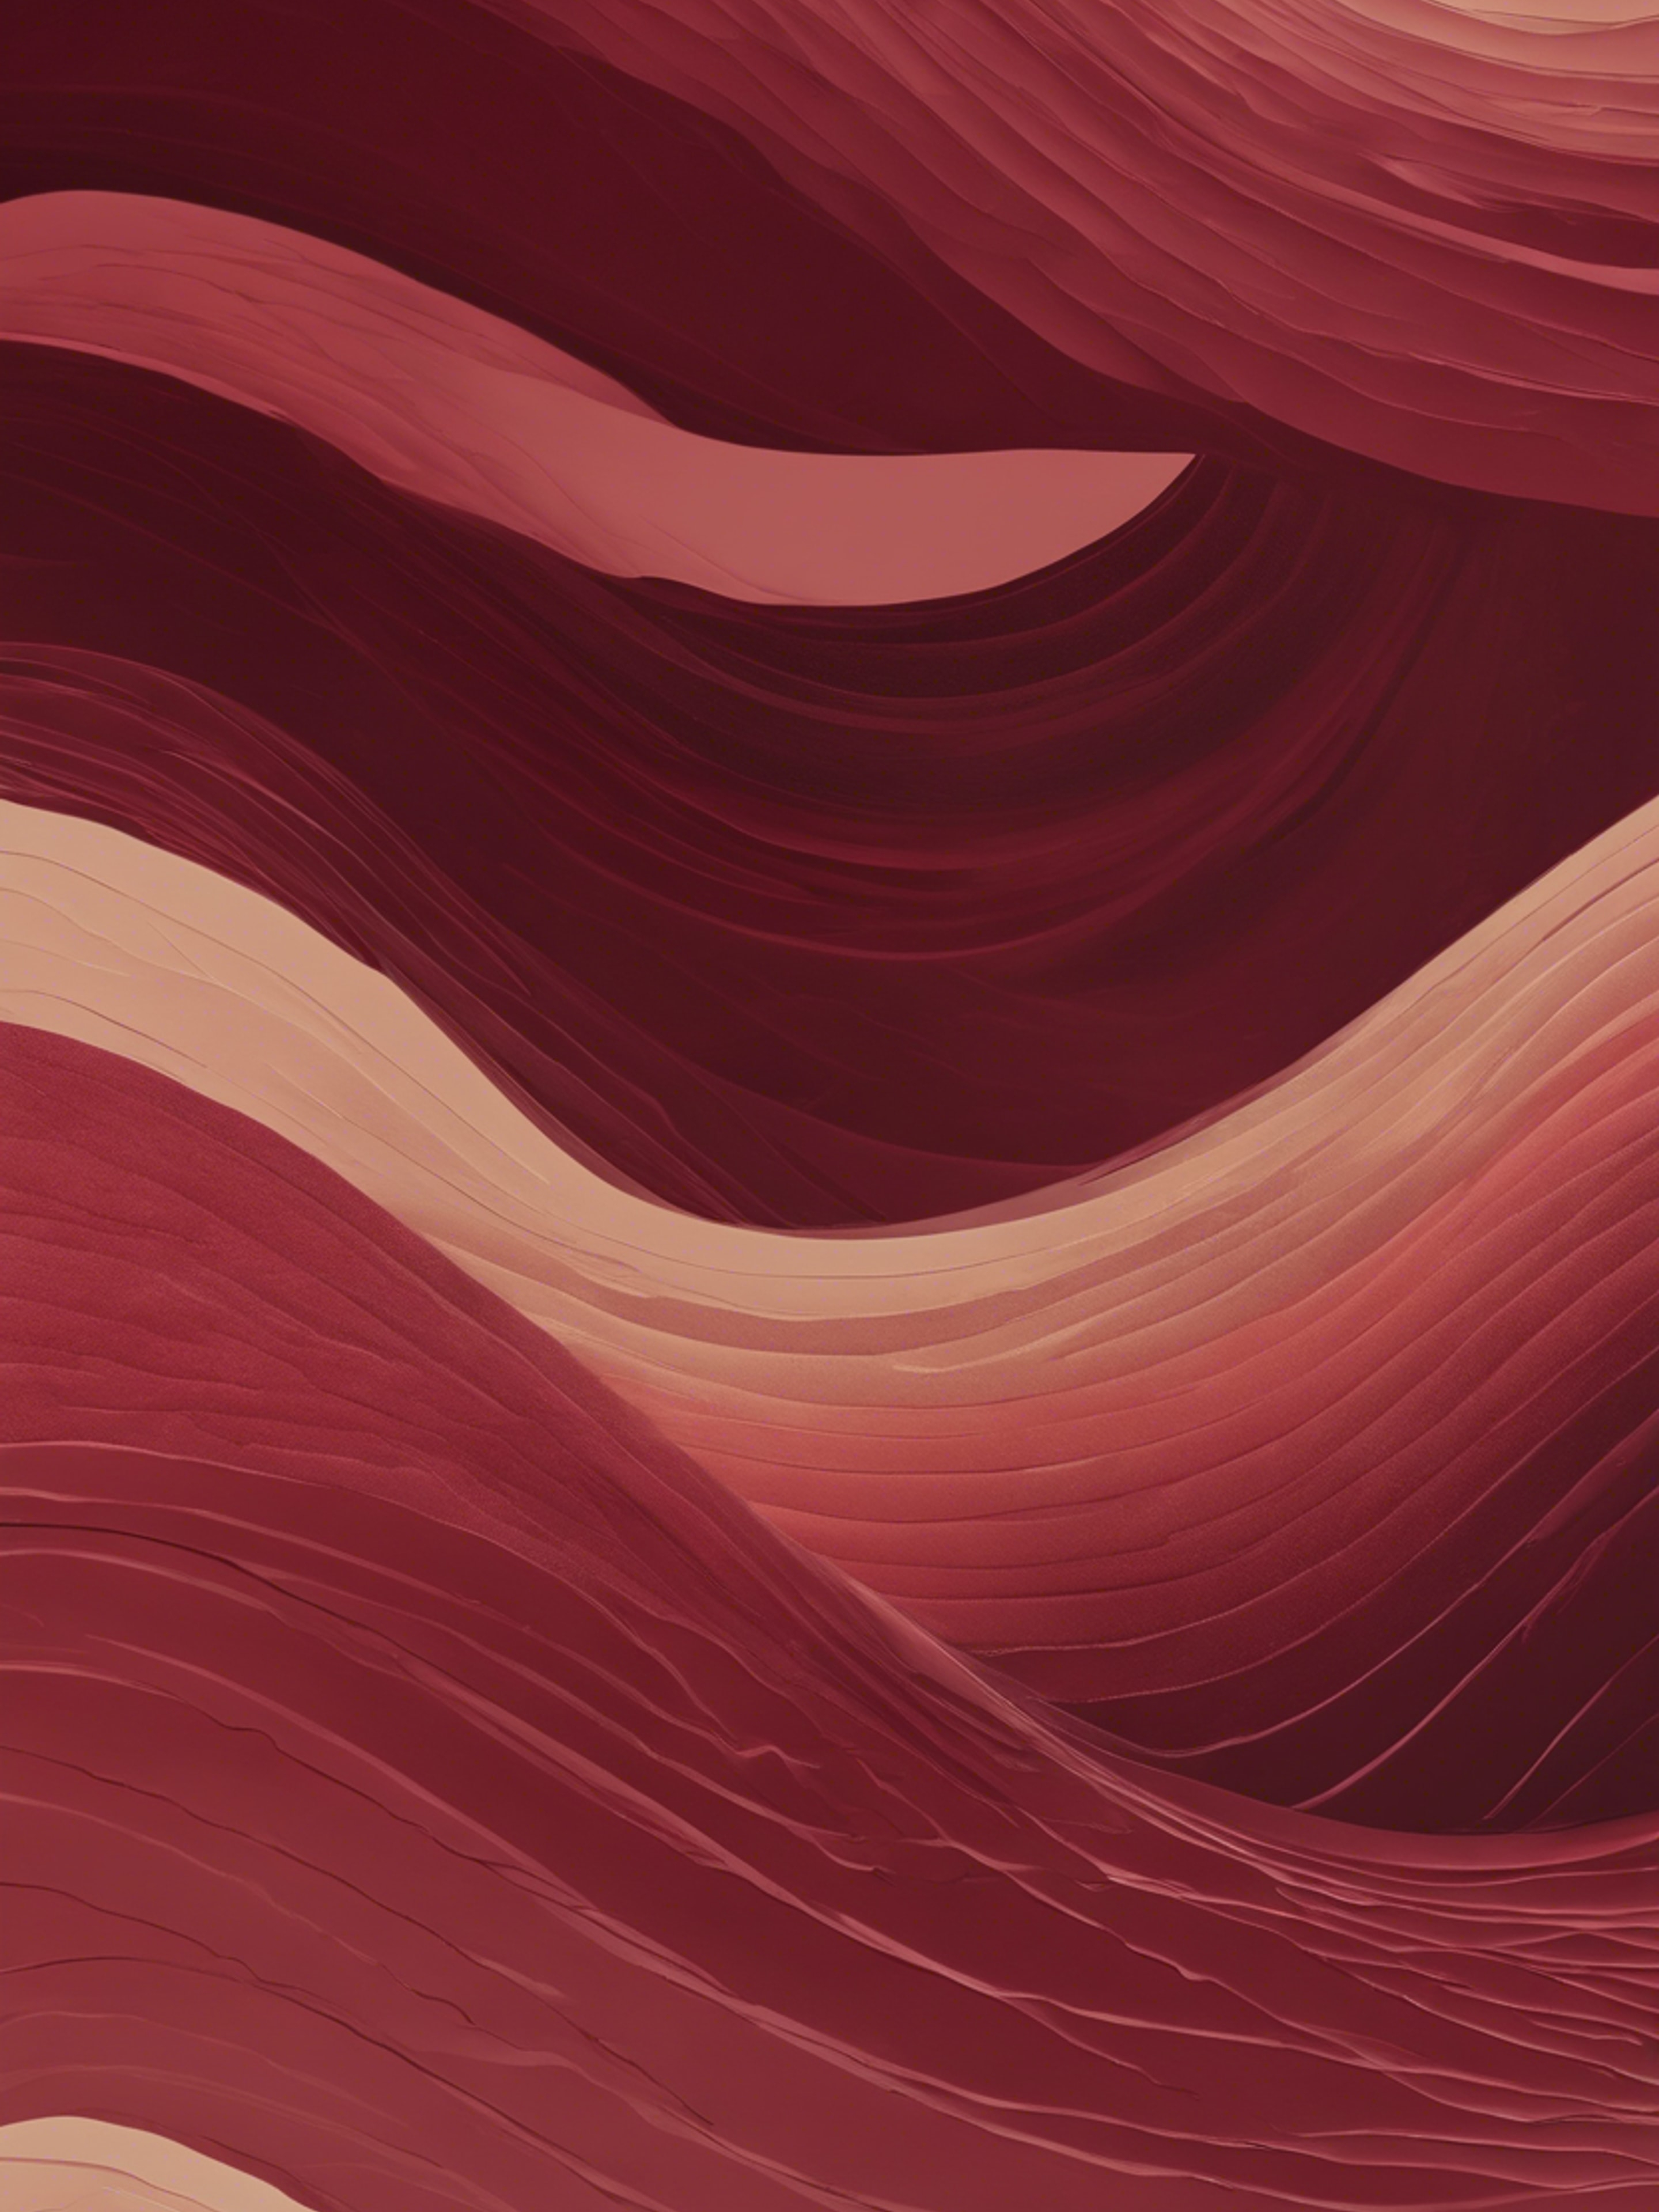 Gradient of maroon to walnut in wave-like strokes, producing a sleek abstract design. Wallpaper[5b388aaadd4645a584ca]